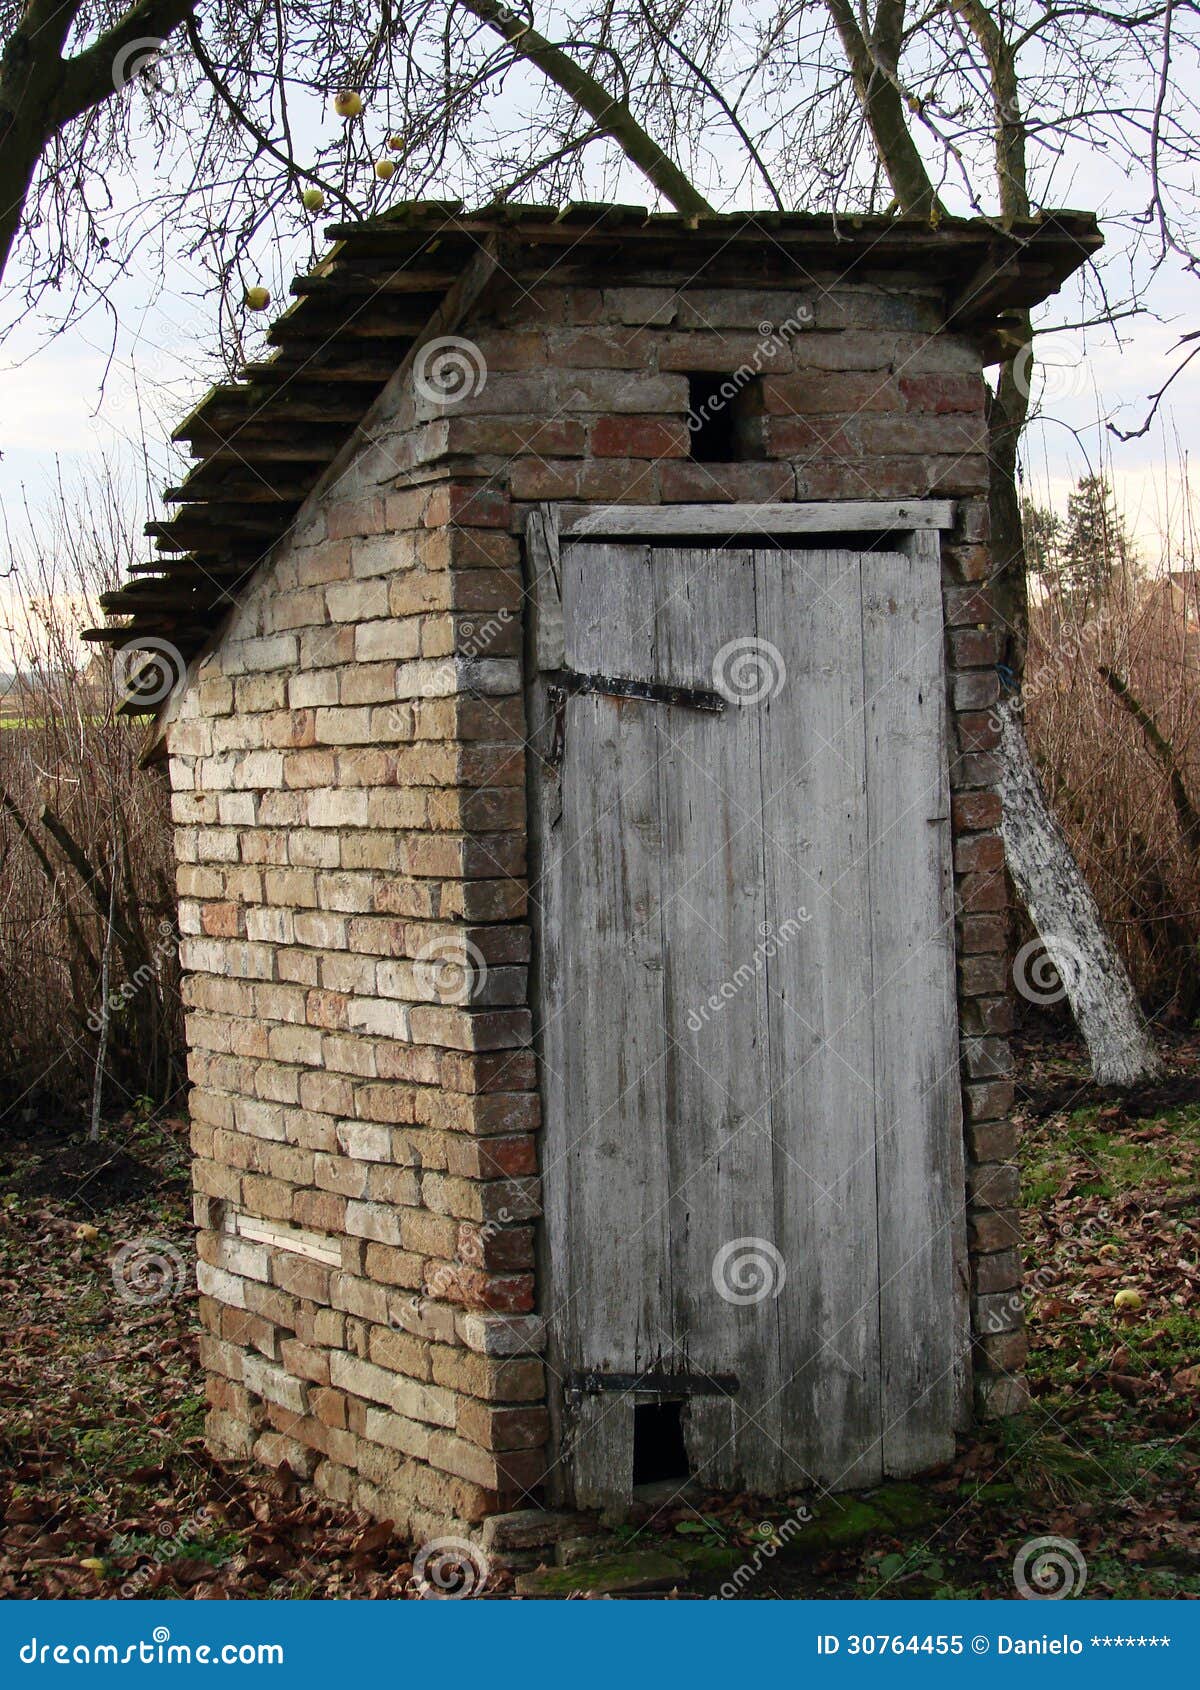 toilet-old-outdoor-made-bricks-30764455.jpg